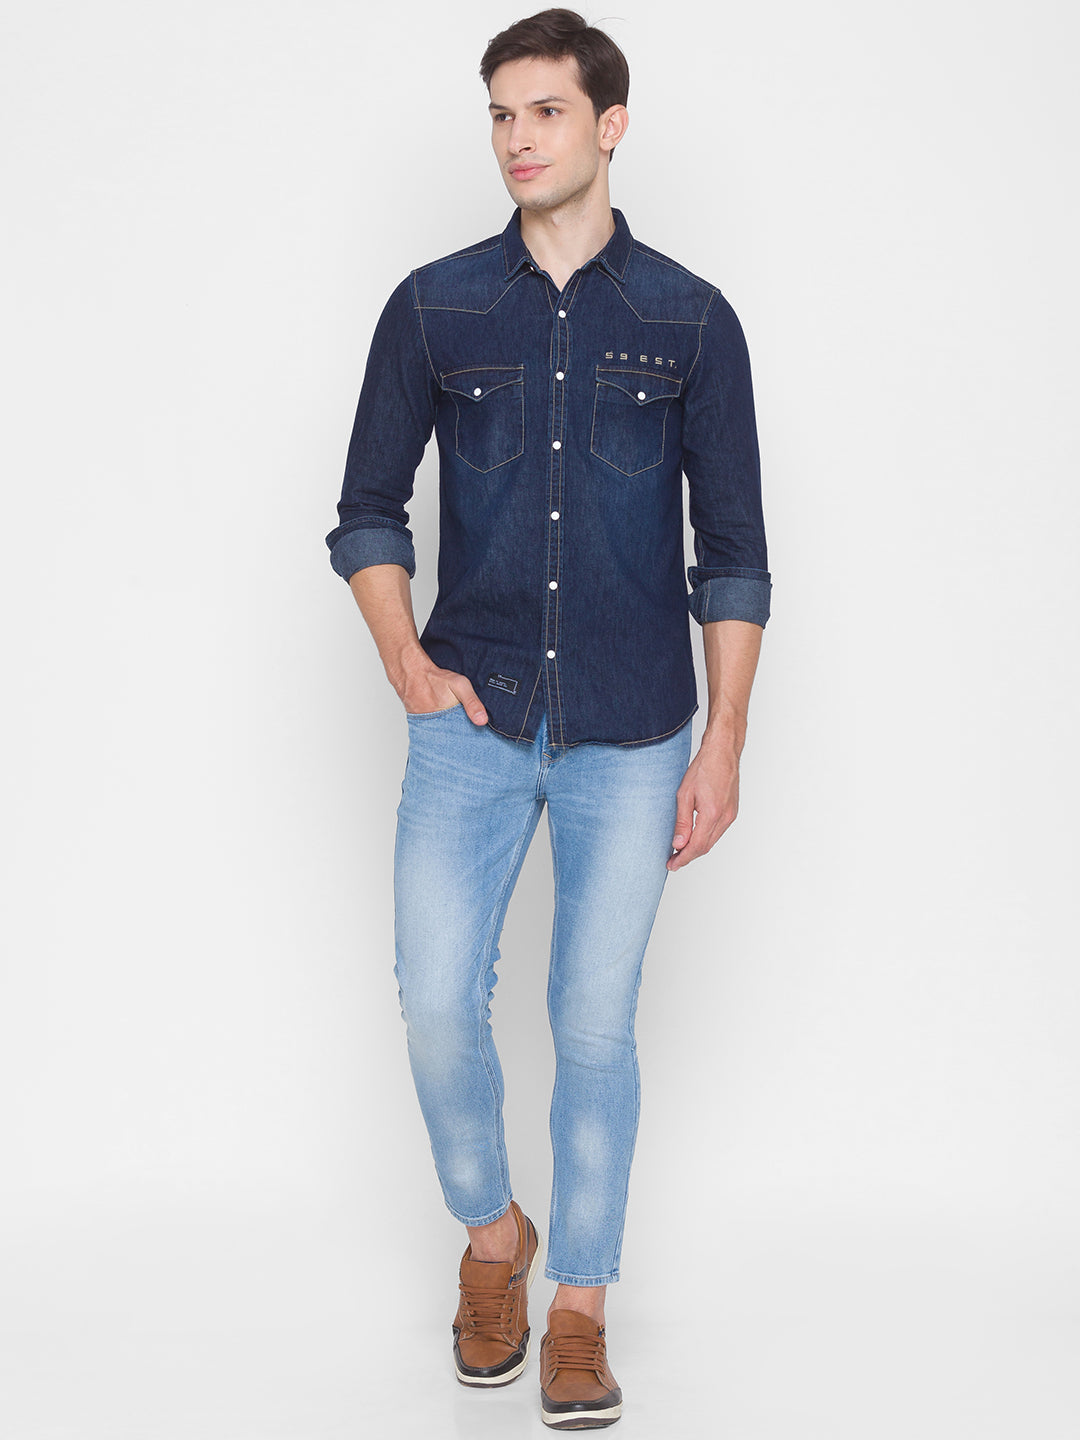 8 Black Shirt Combination Ideas for men 2023 | Shirt outfit men, Blue jeans  outfit men, Jeans outfit men